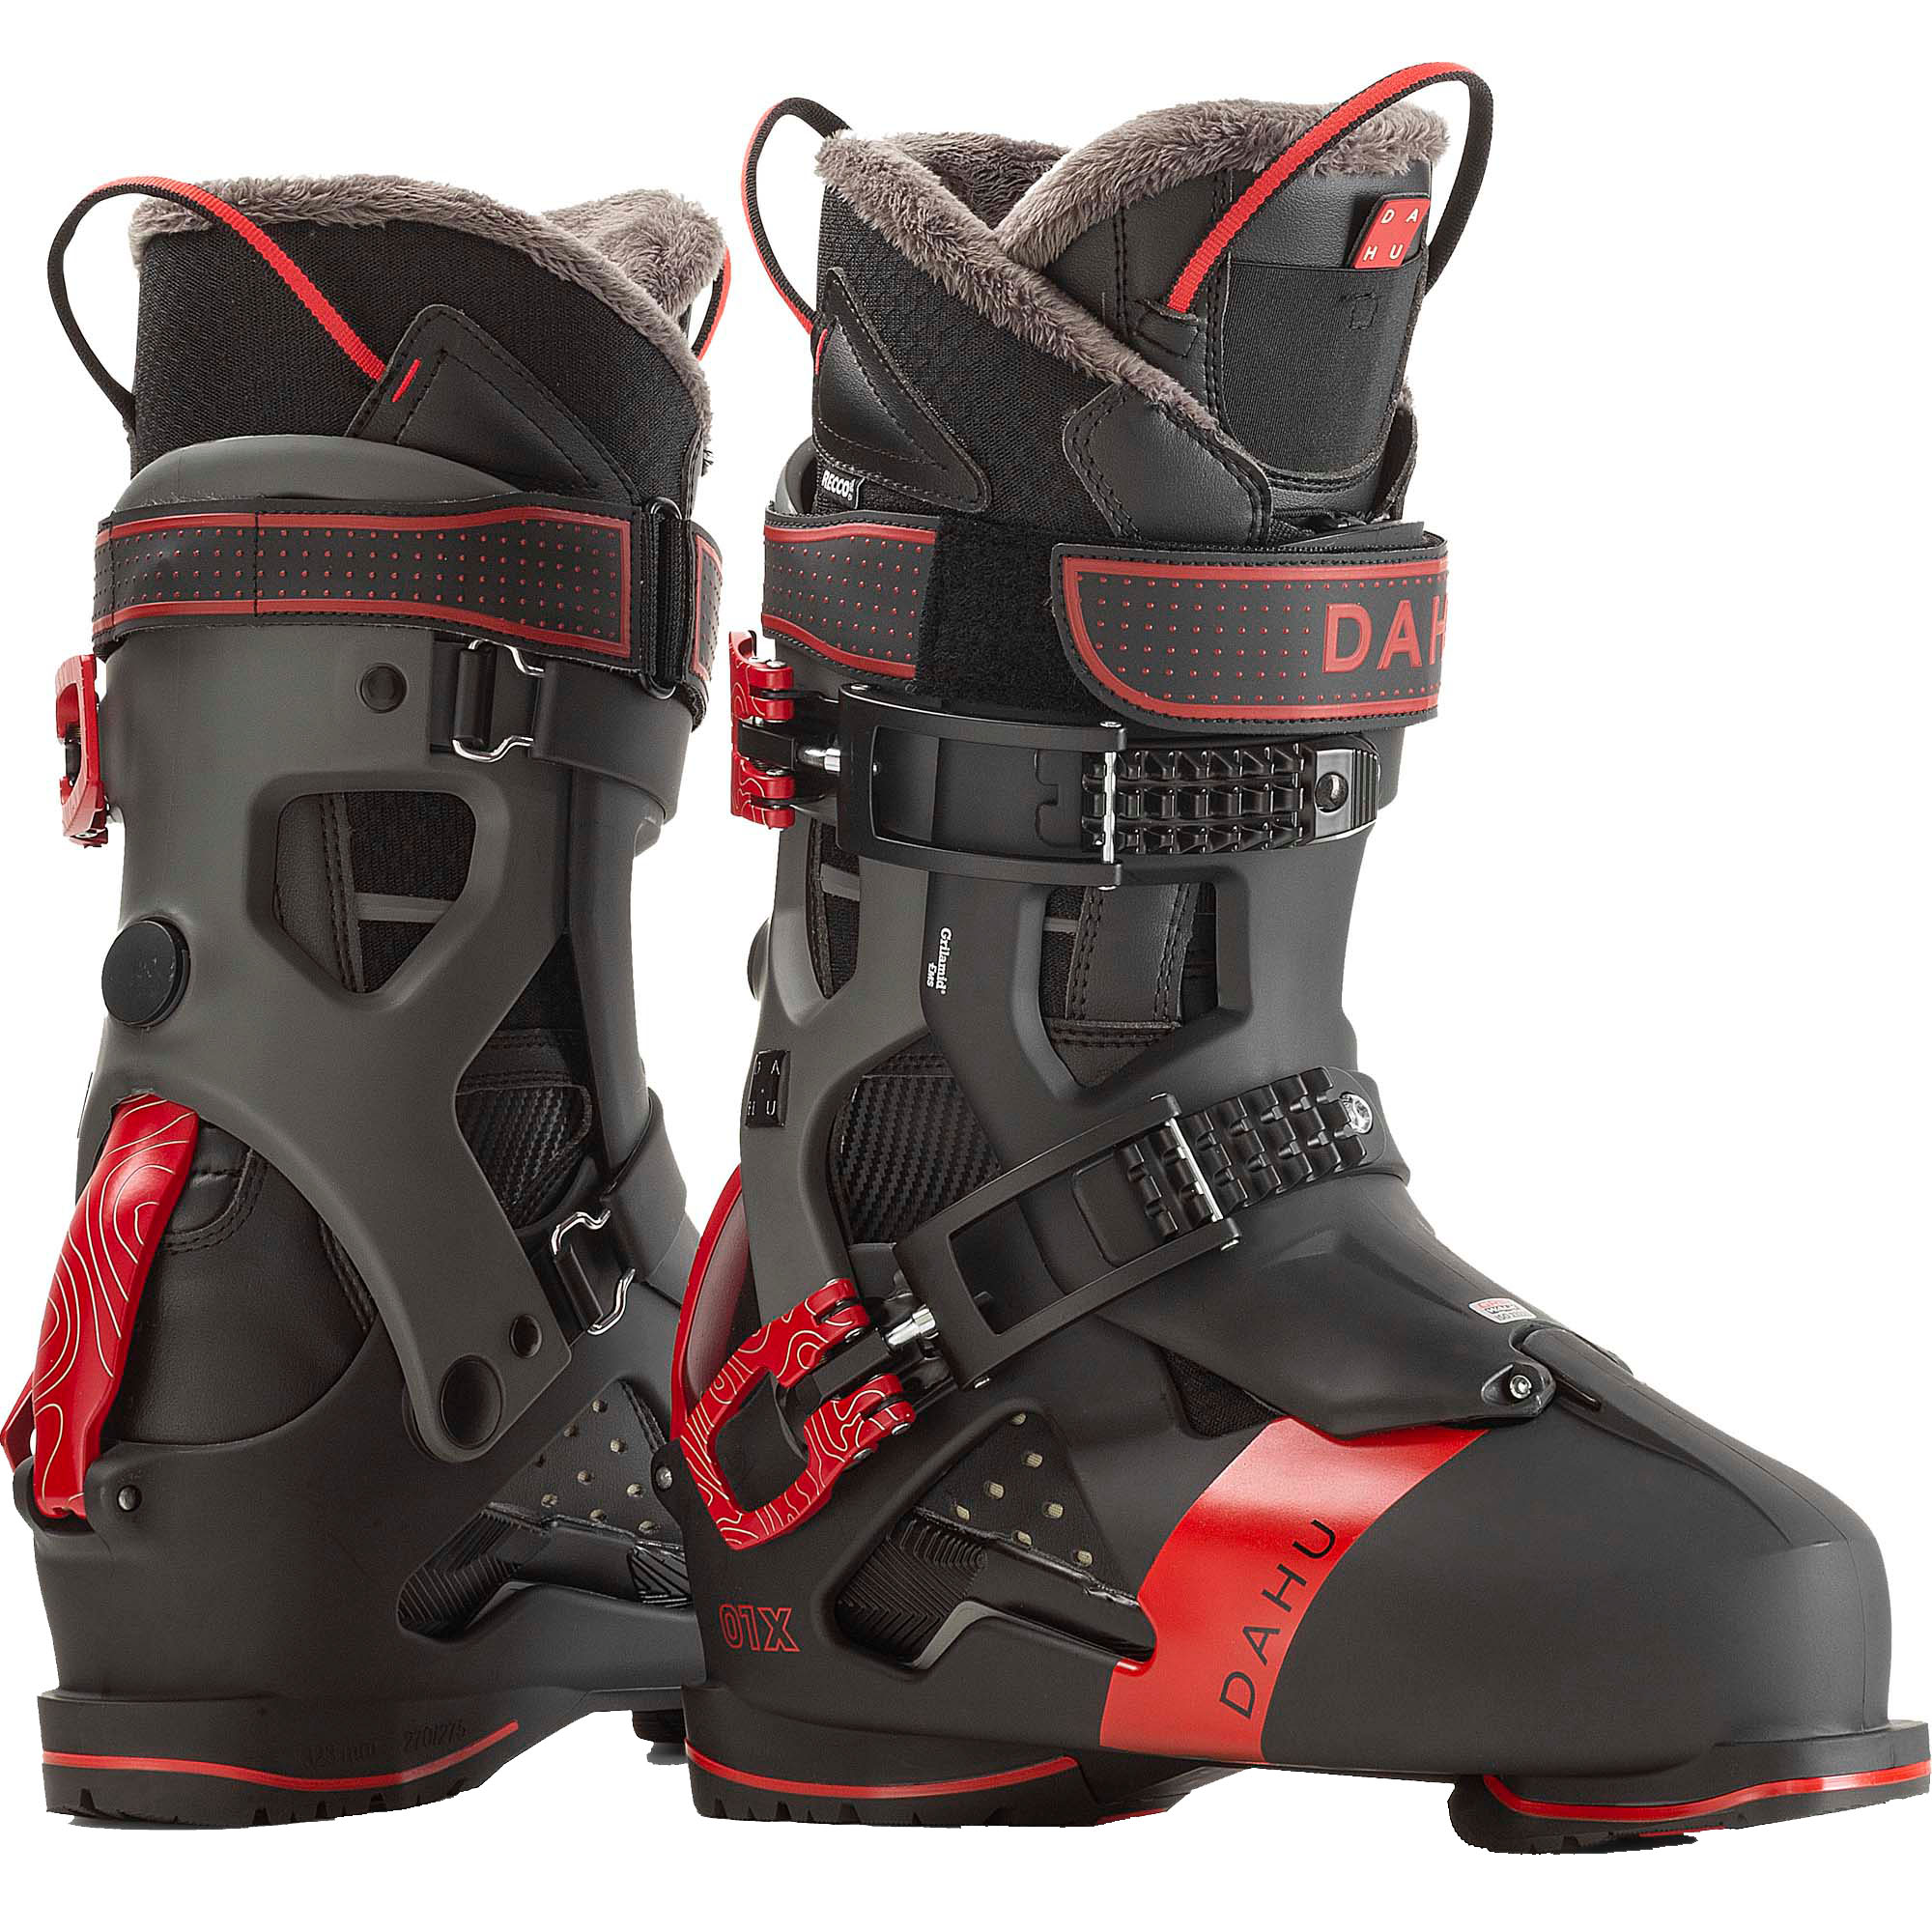 DAHU Ecorce 01X Ski Boots